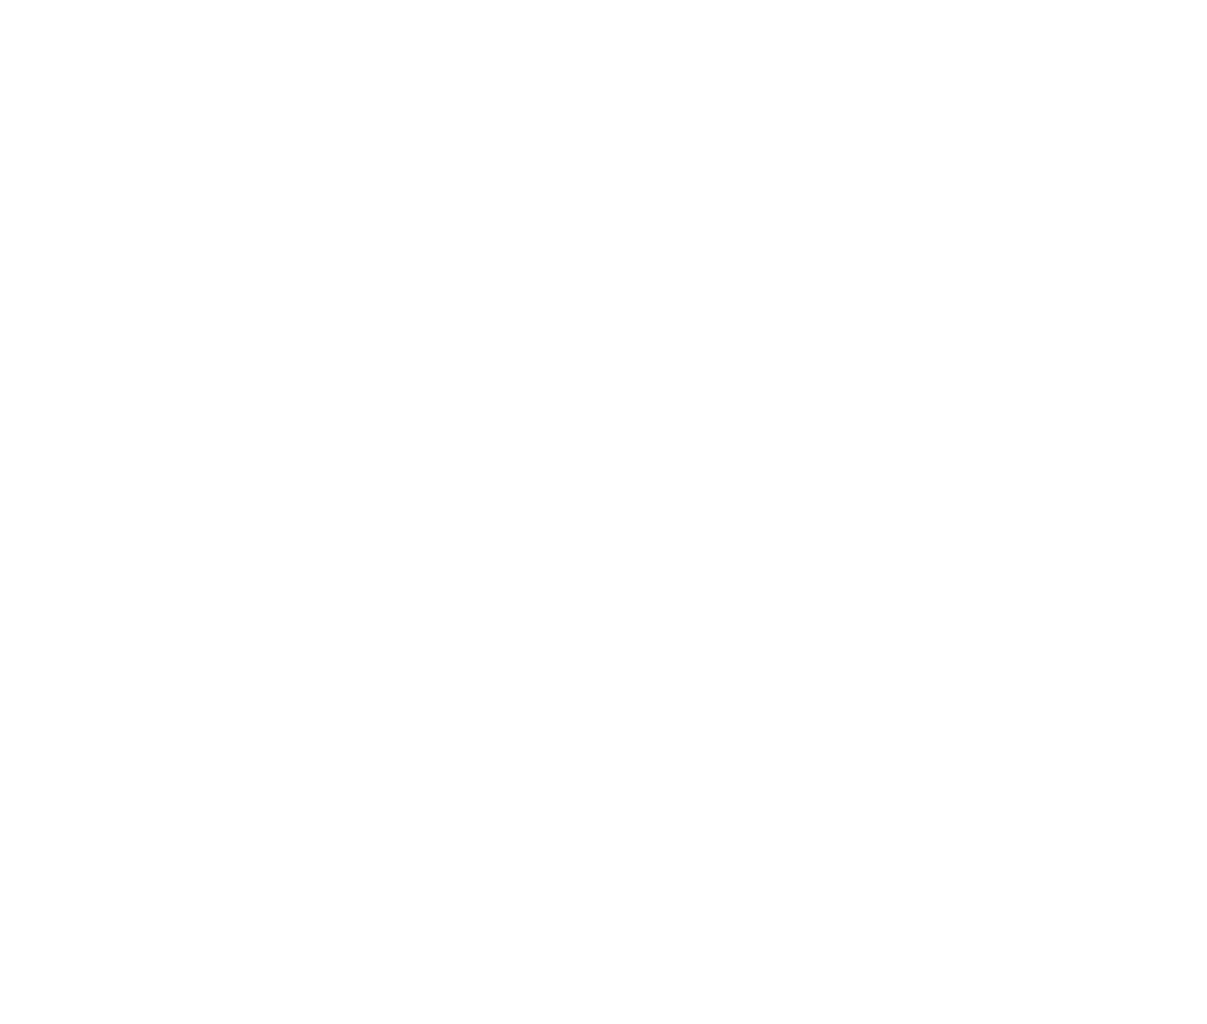 UN Global Purpose